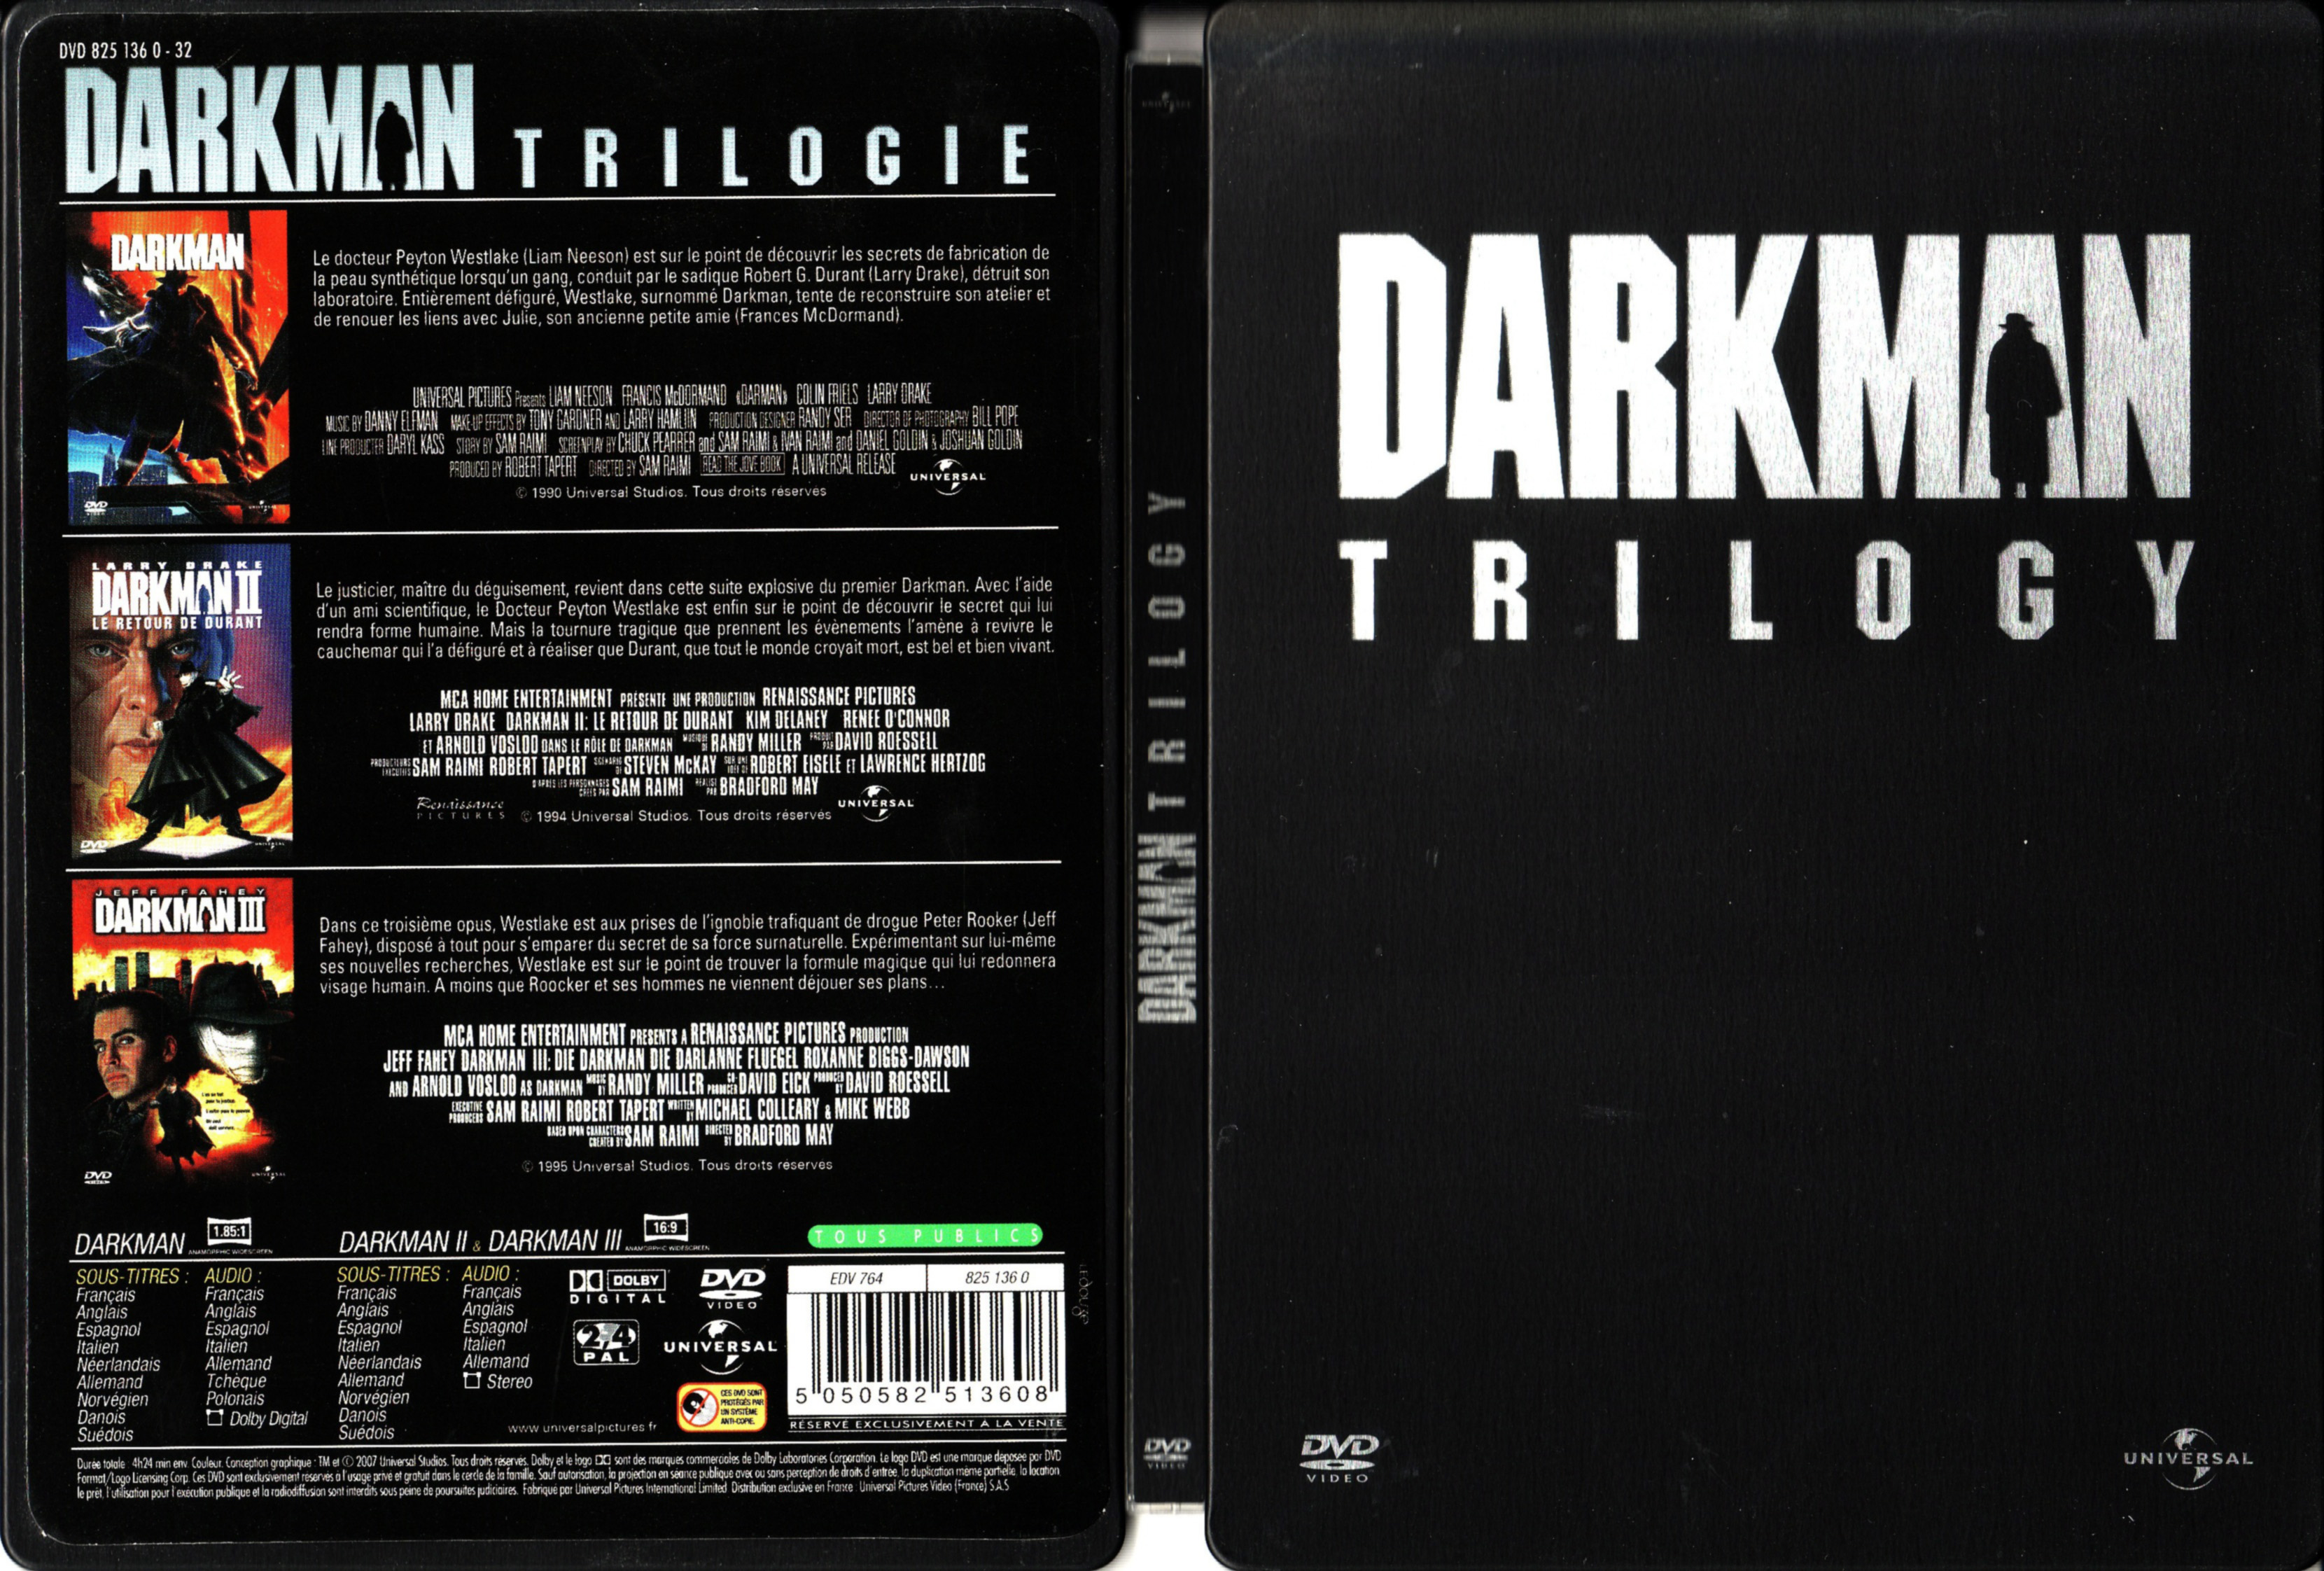 Jaquette DVD Darkman Trilogy